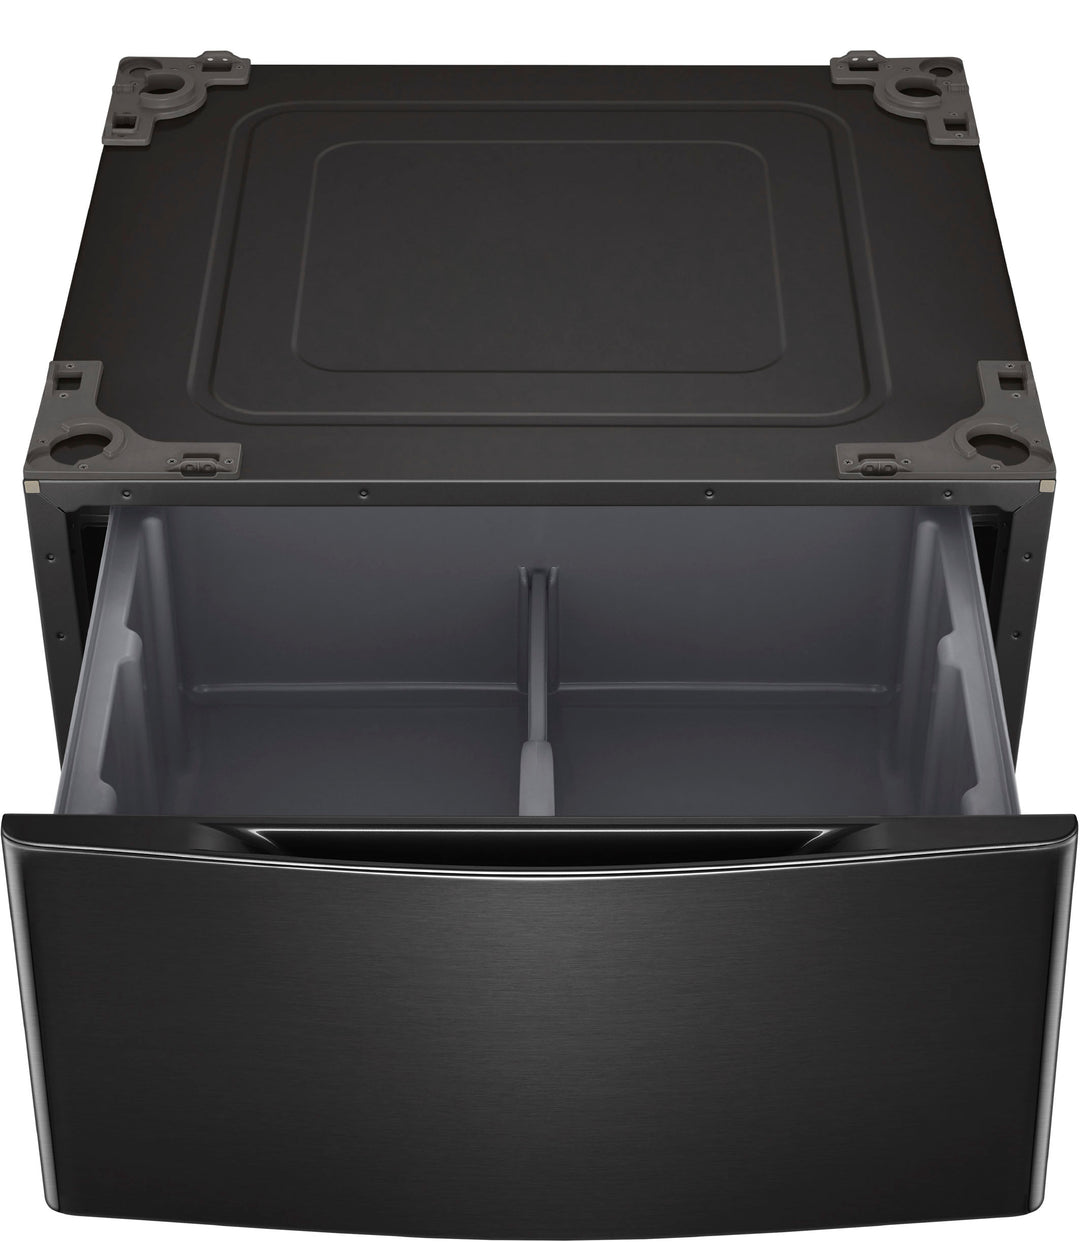 LG - Signature 29" Laundry Pedestal With Storage Drawer - Black_4